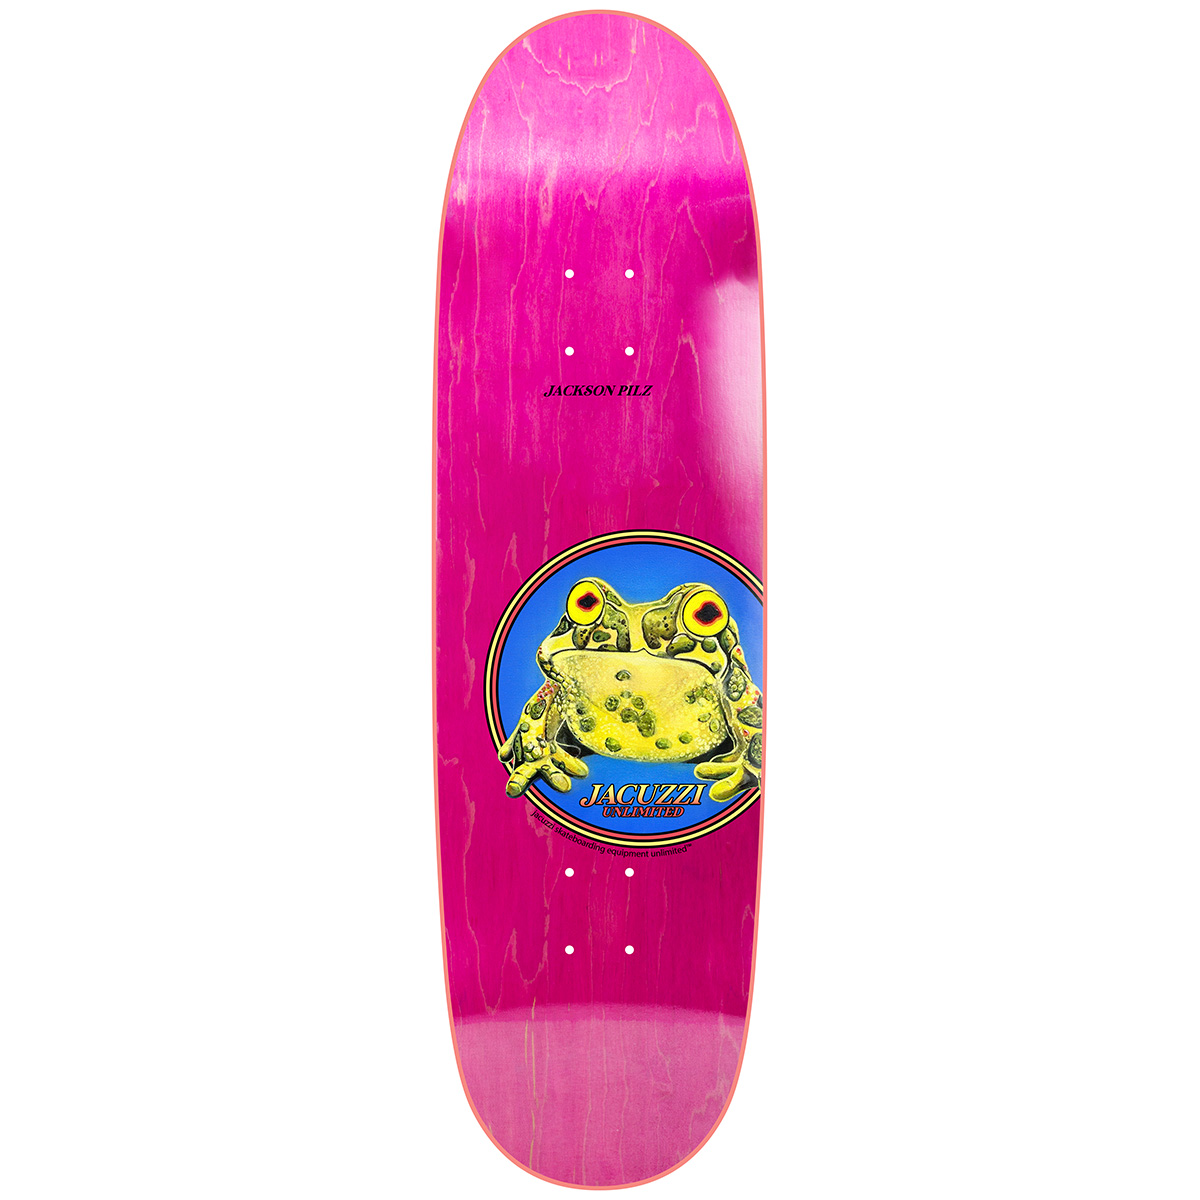 Jacuzzi Jackson Pilz Toadadelic Skateboard Deck Pink 9.125